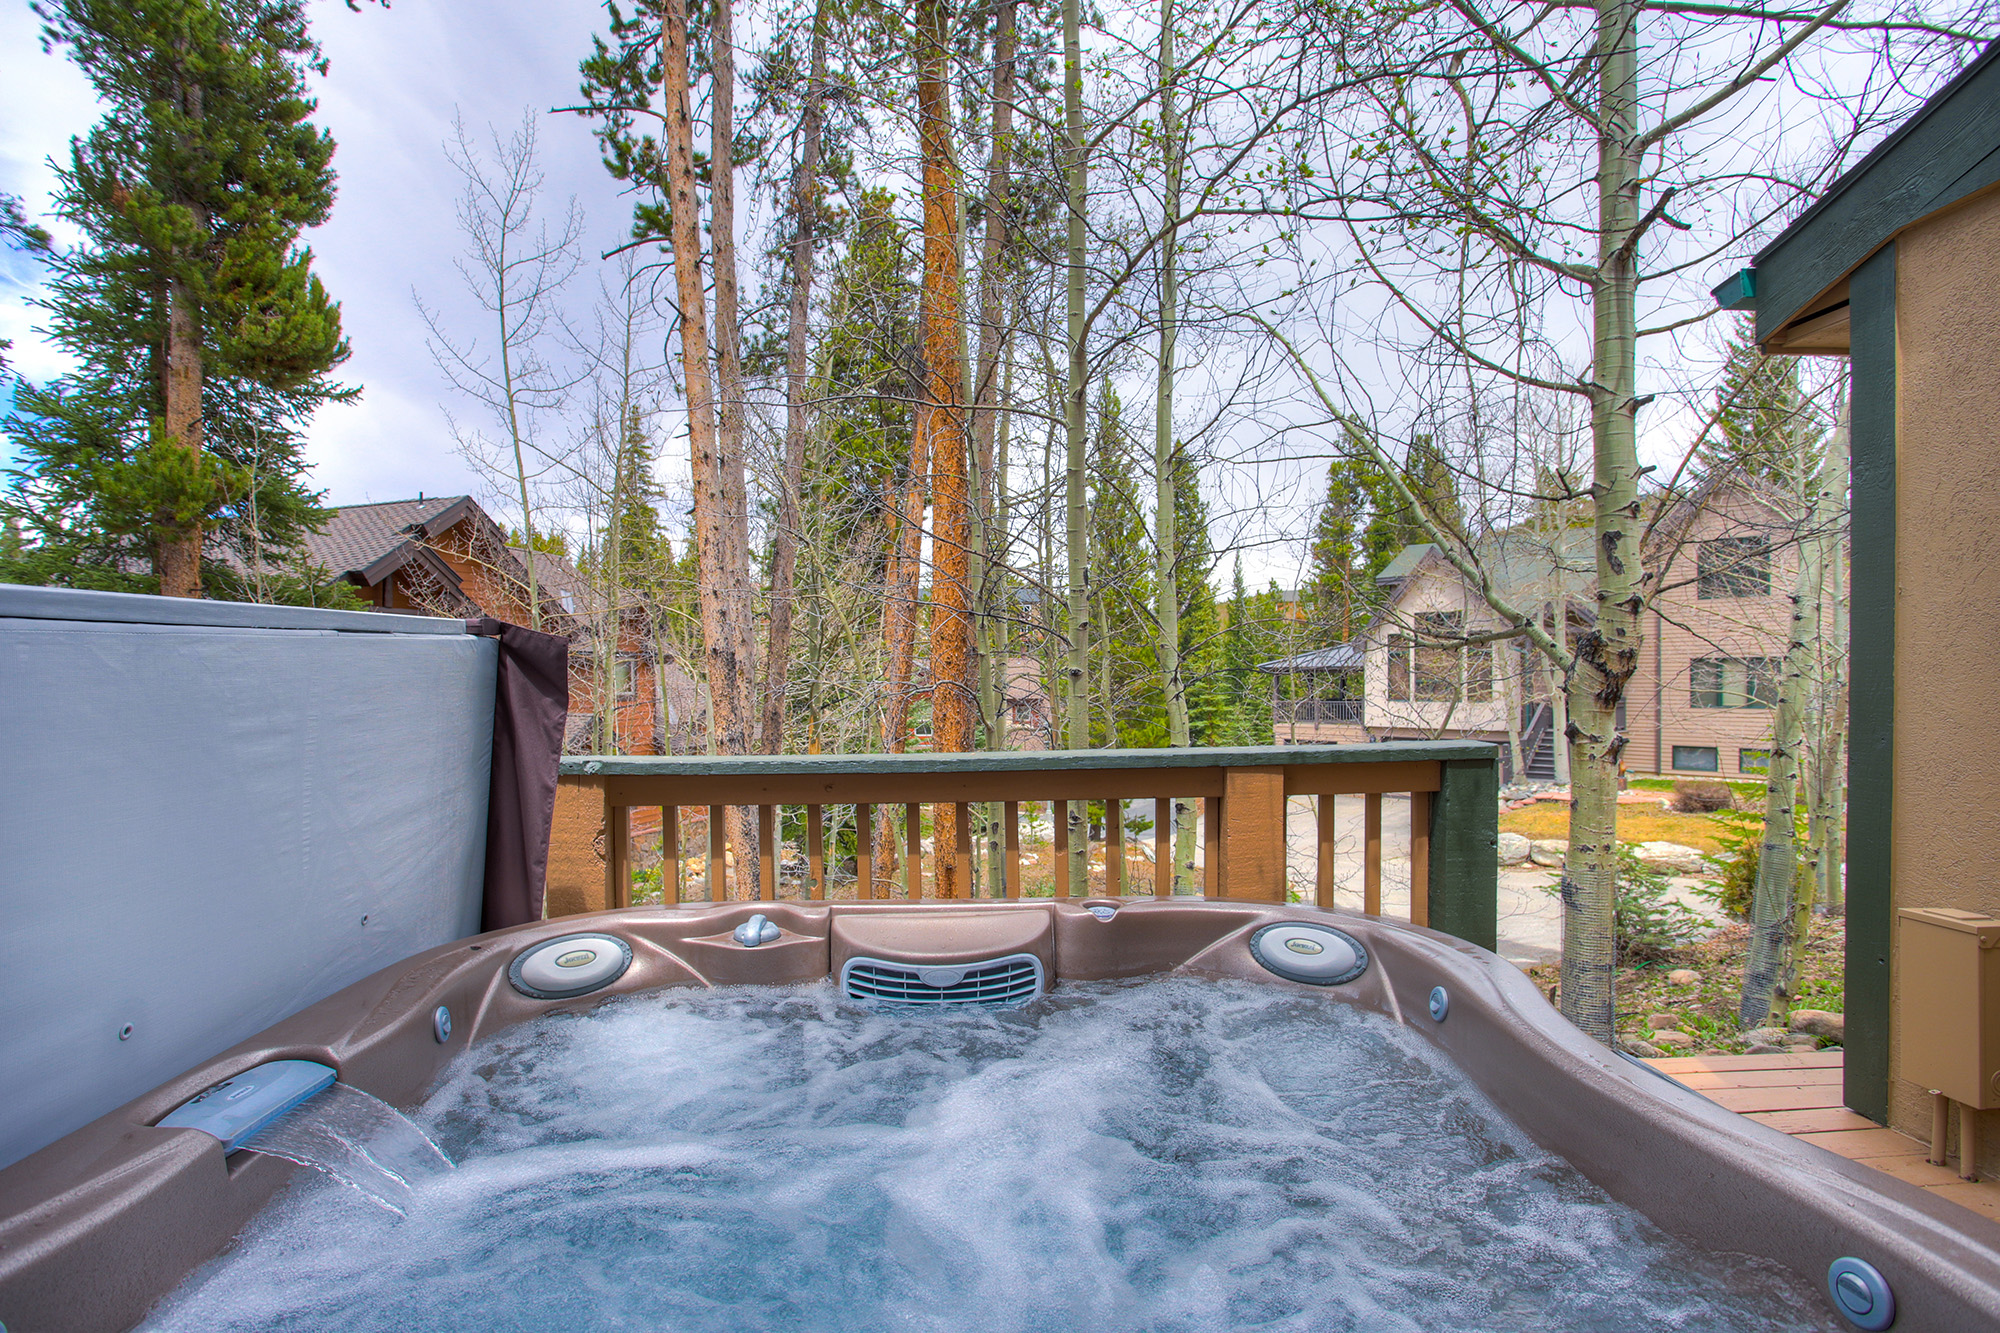 Hot tub view - Friendly Fox Chalet - Breckenridge vacation rental